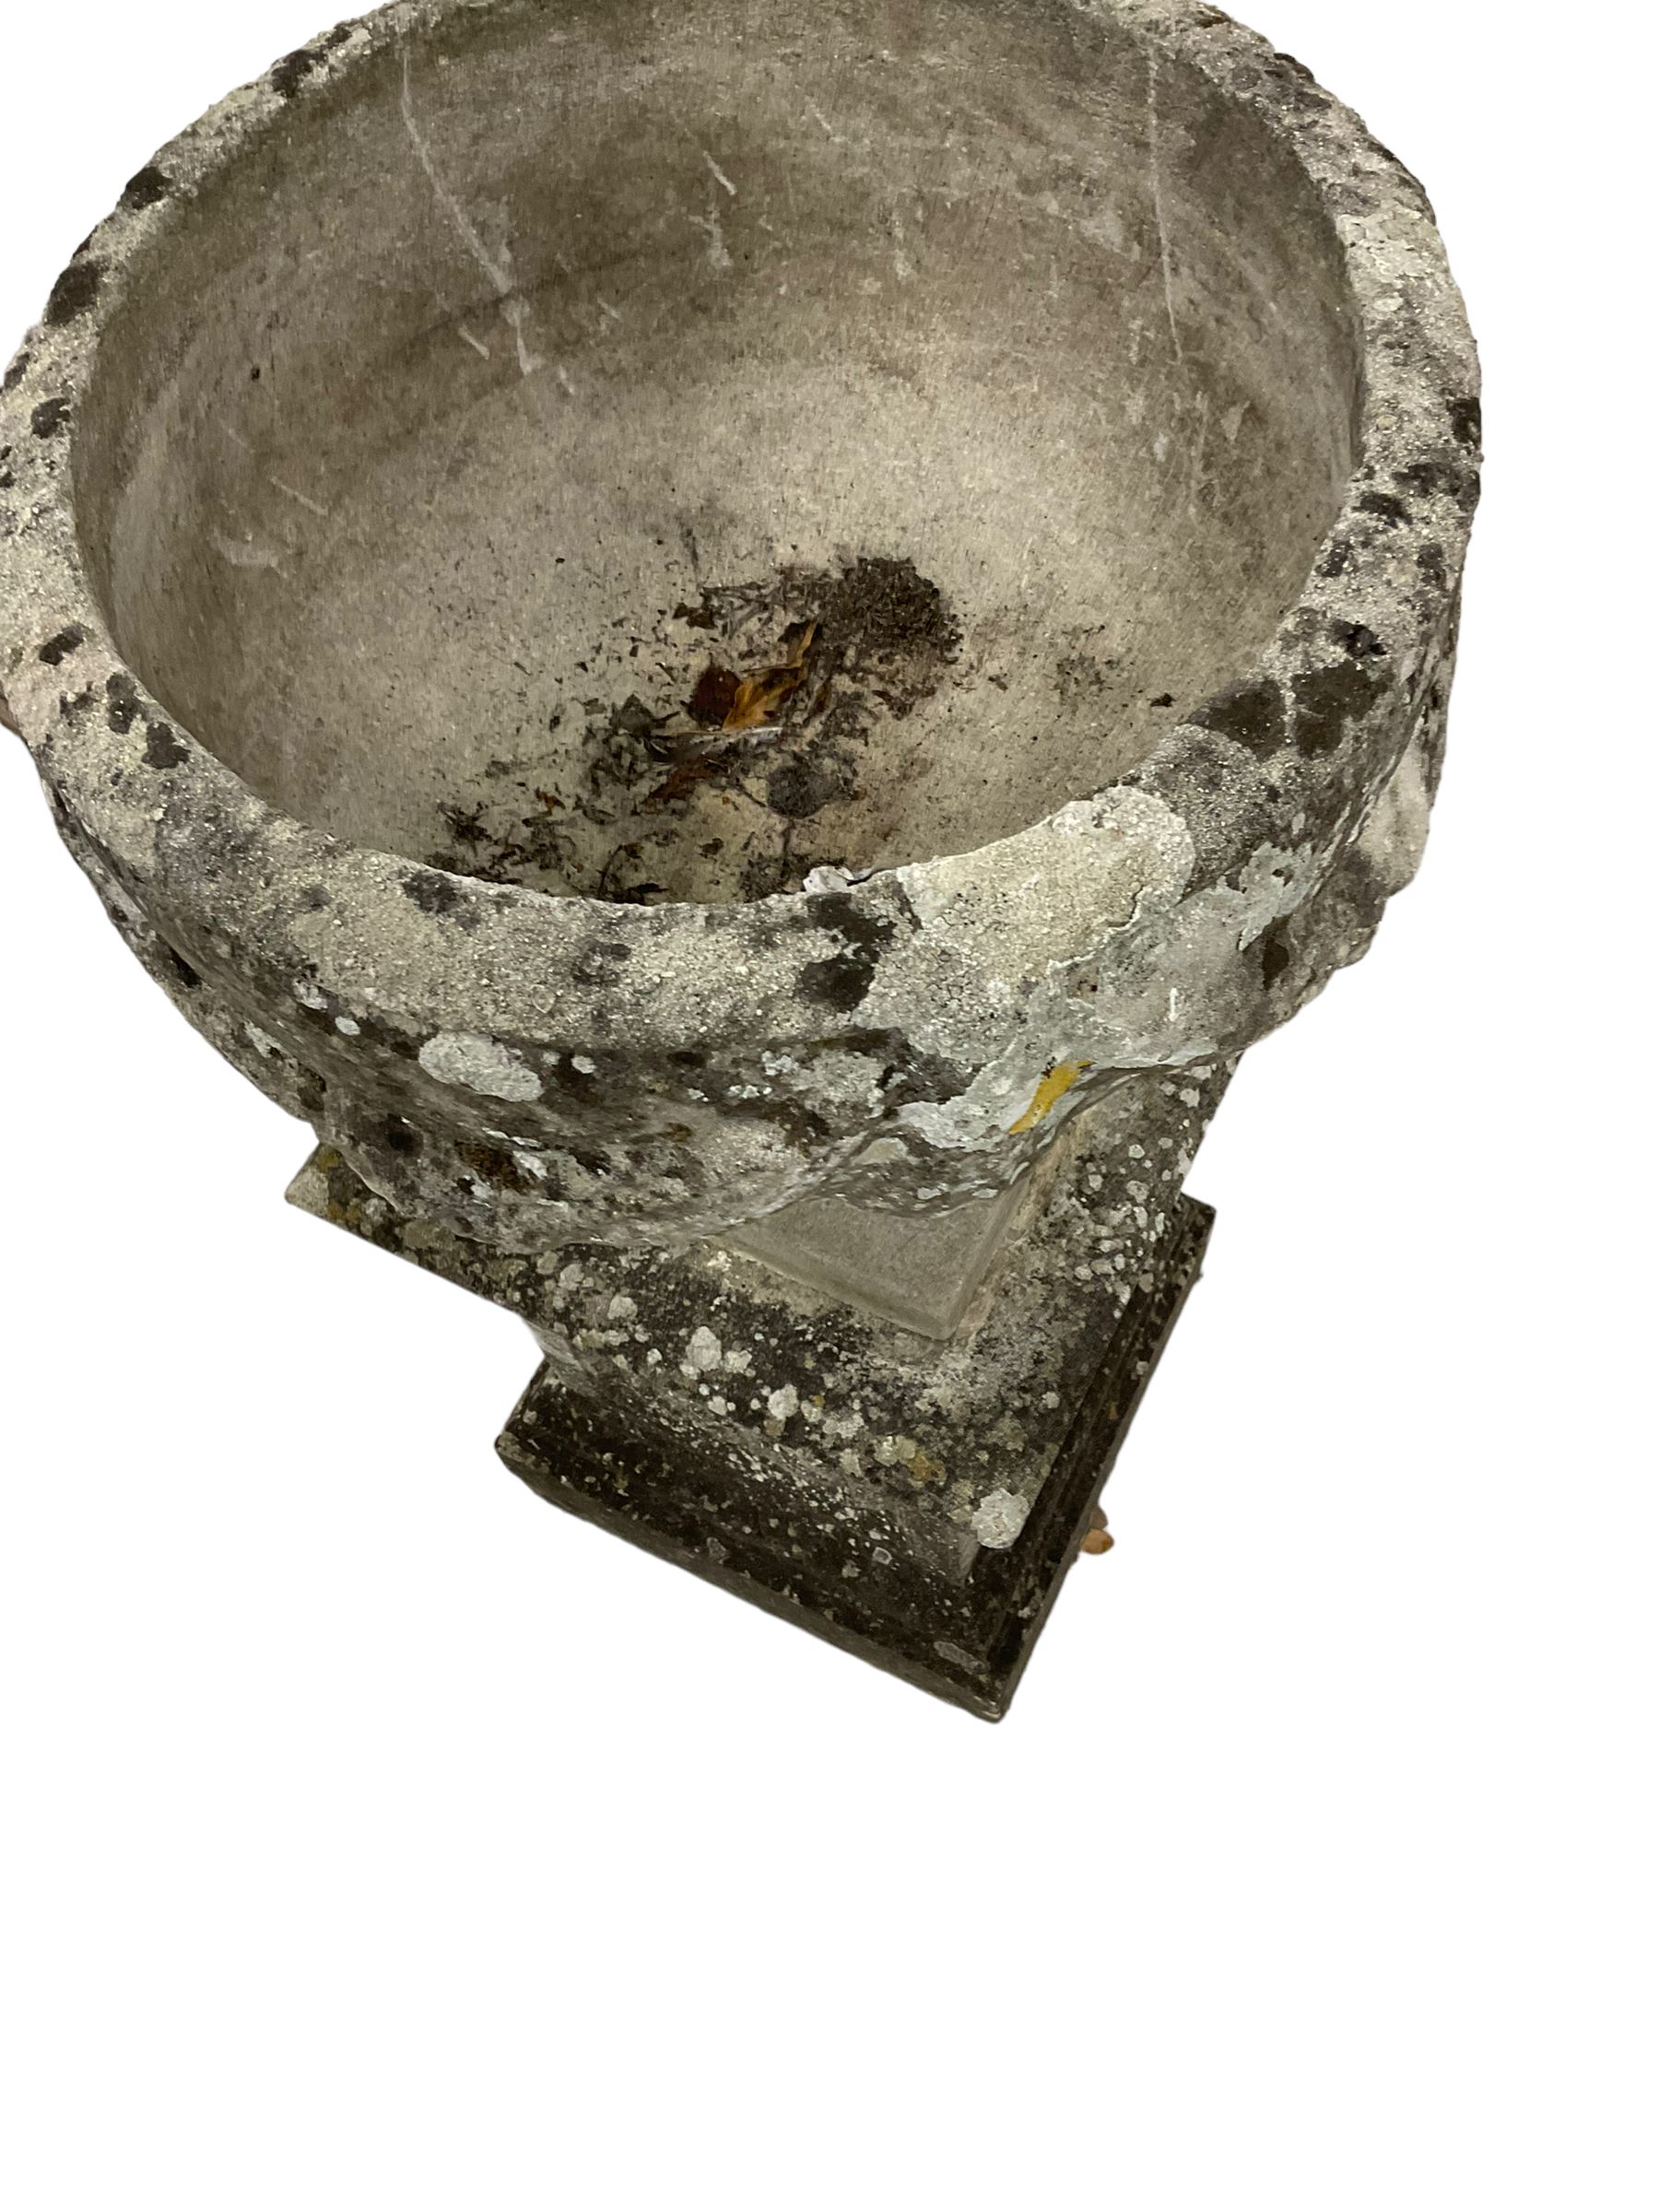 Reconstituted urn - Image 2 of 3